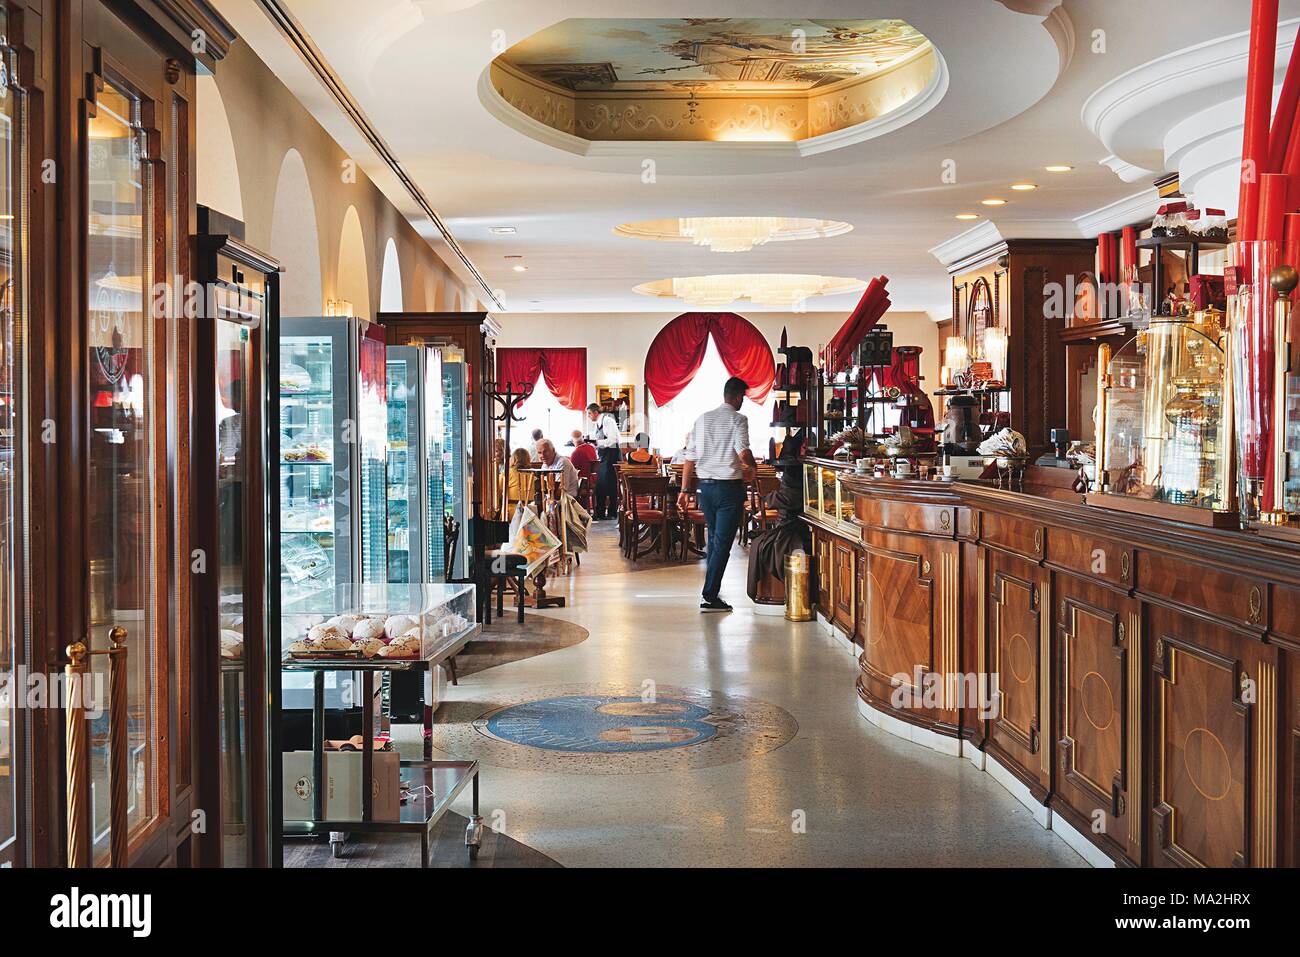 Caffe Degli Specchi, Triest, Italy Stock Photo - Alamy